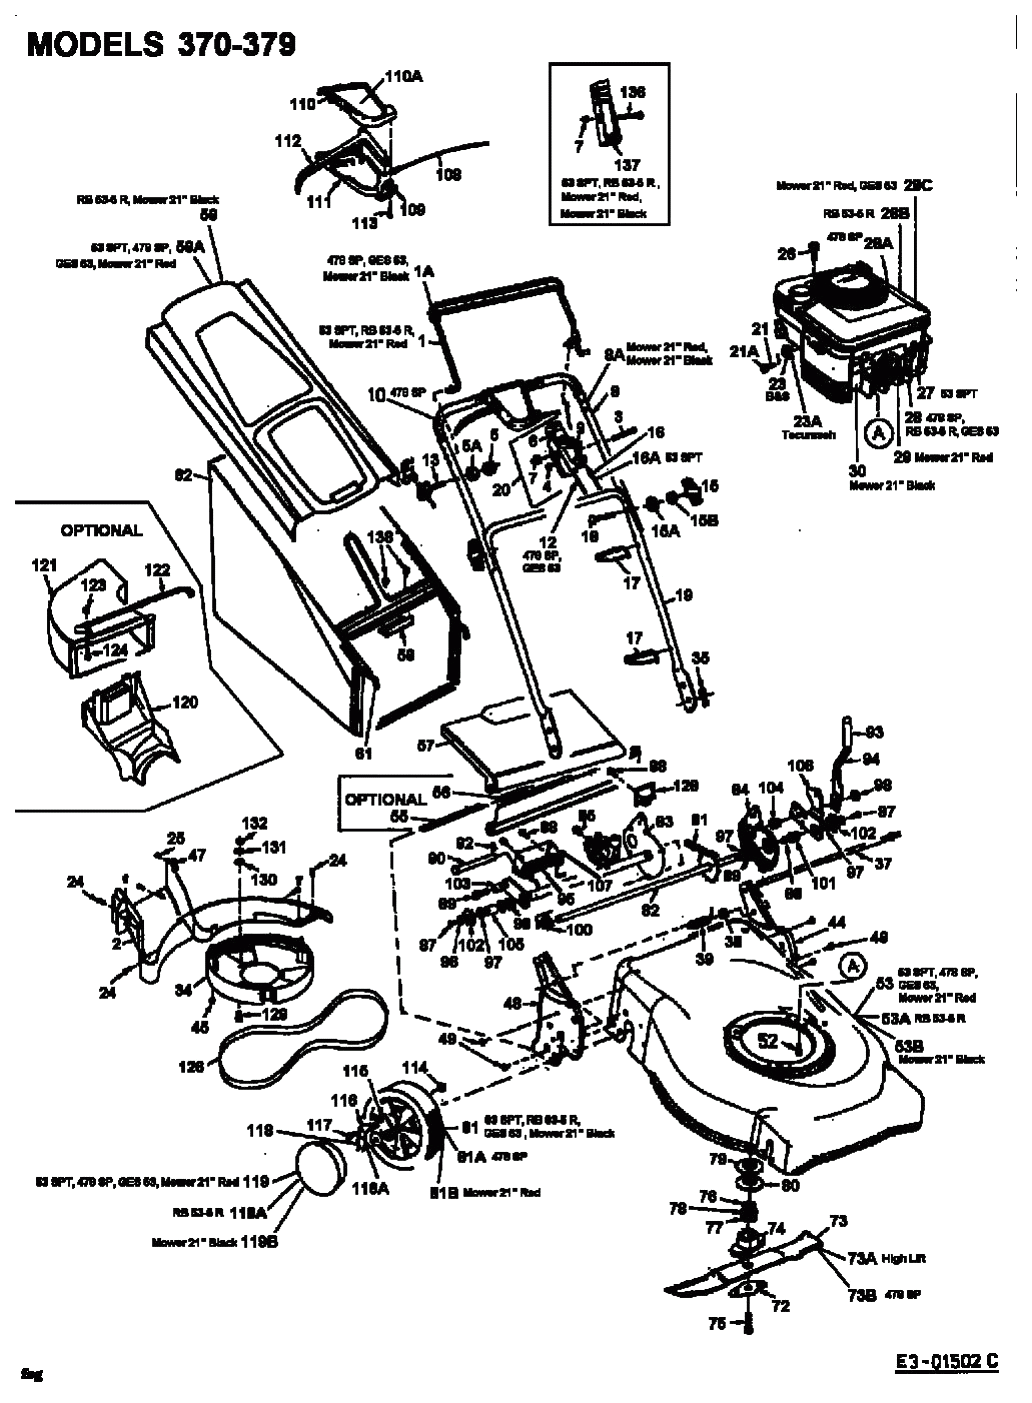 MTD Артикул 12A-379W300 (год выпуска 2002). Основная деталировка